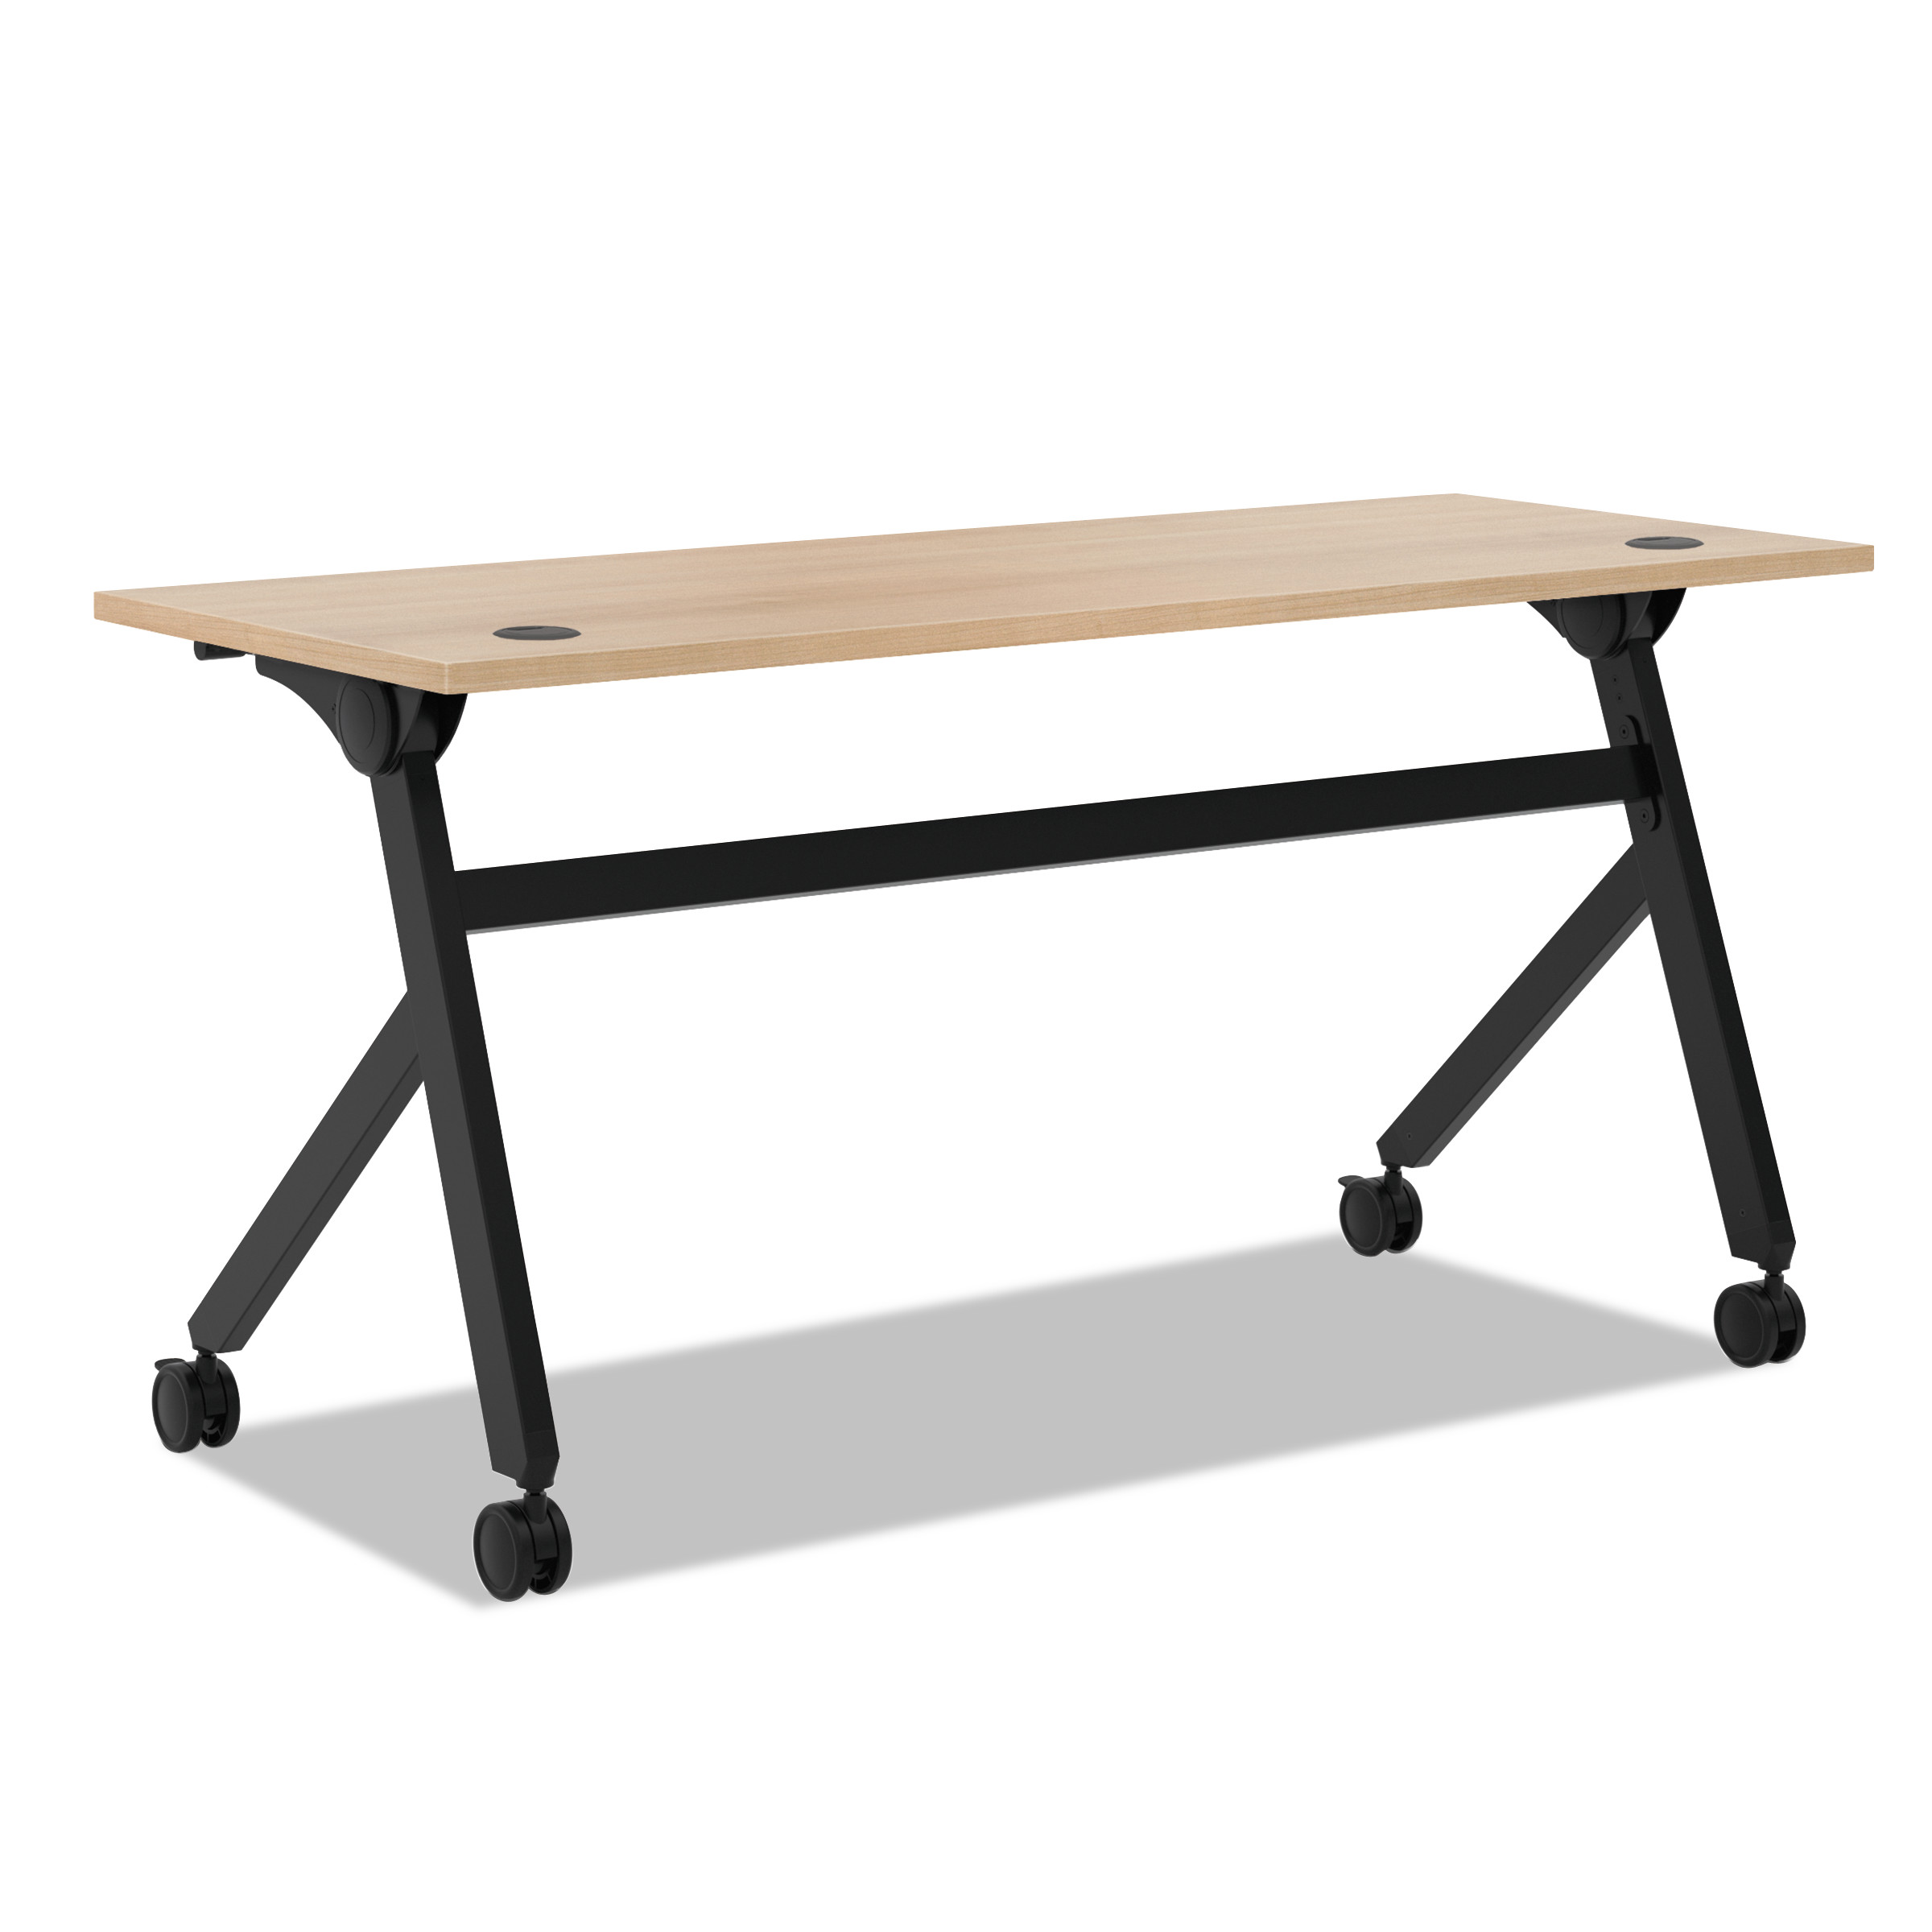  HON HBMPT6024P.WH Multipurpose Table Flip Base Table, 60w x 24d x 29 3/8h, Wheat (BSXBMPT6024PW) 